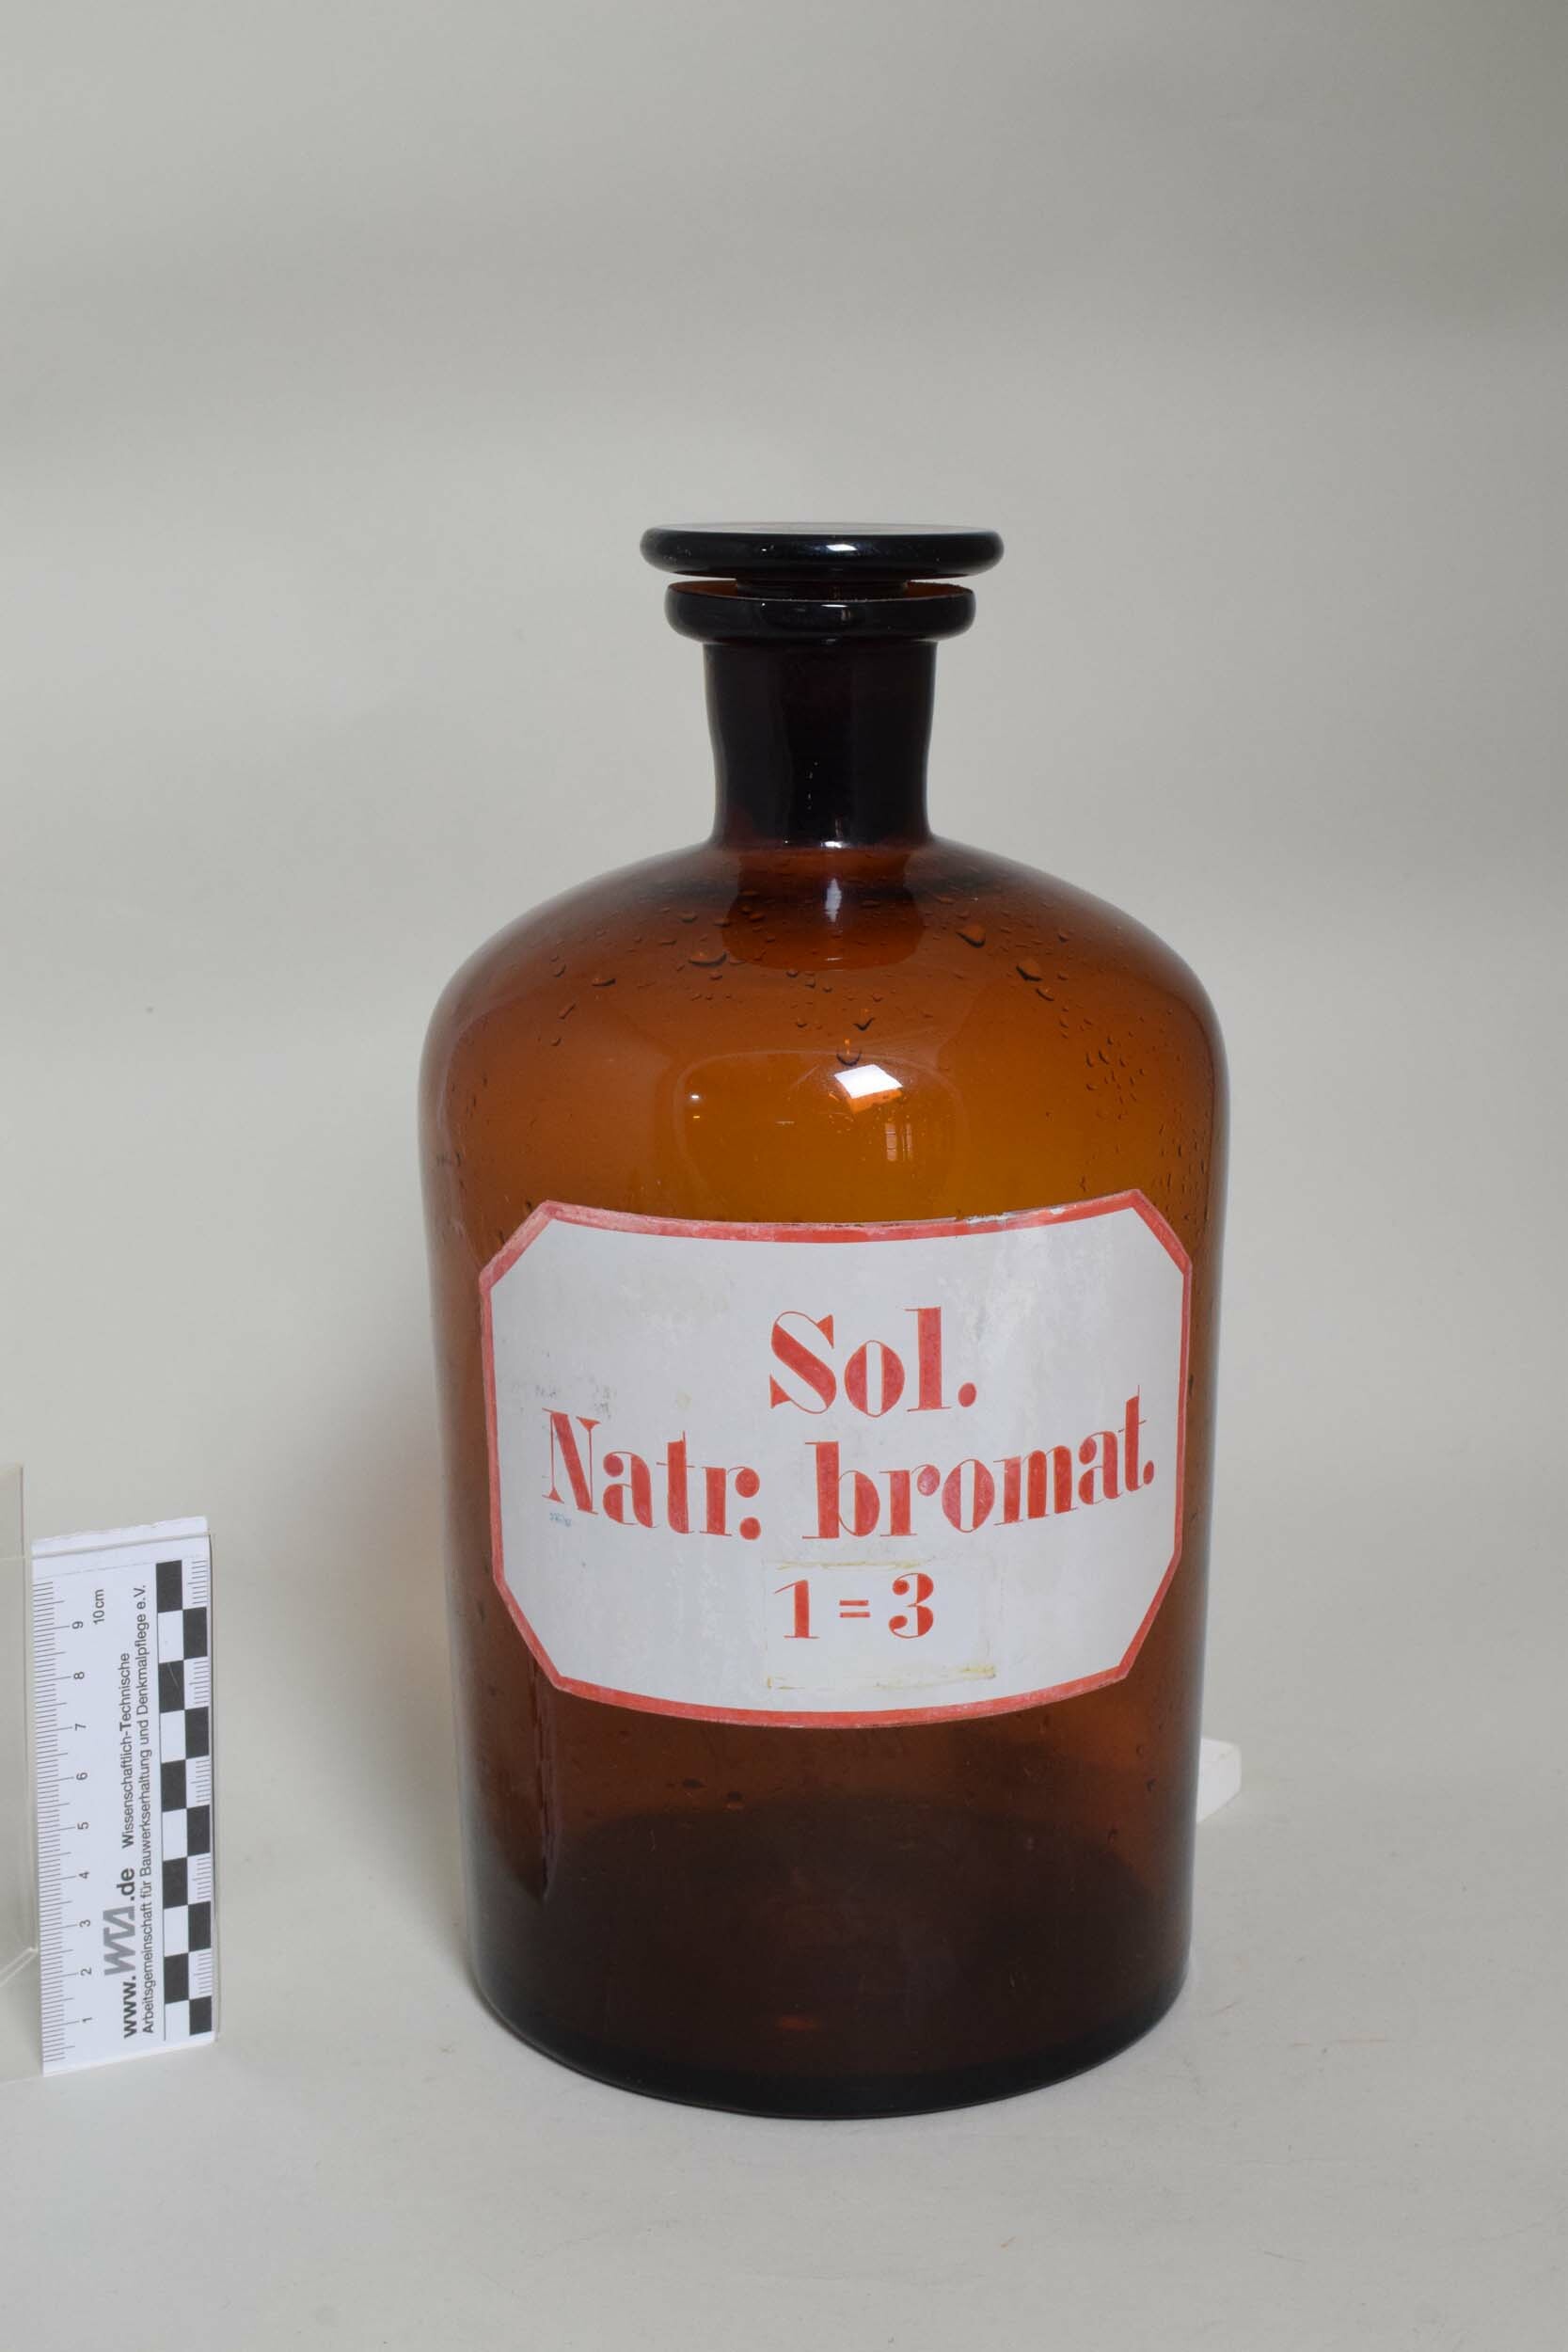 Apothekenflasche "Sol.Natr.bromat. / 1=3" (Heimatmuseum Dohna CC BY-NC-SA)